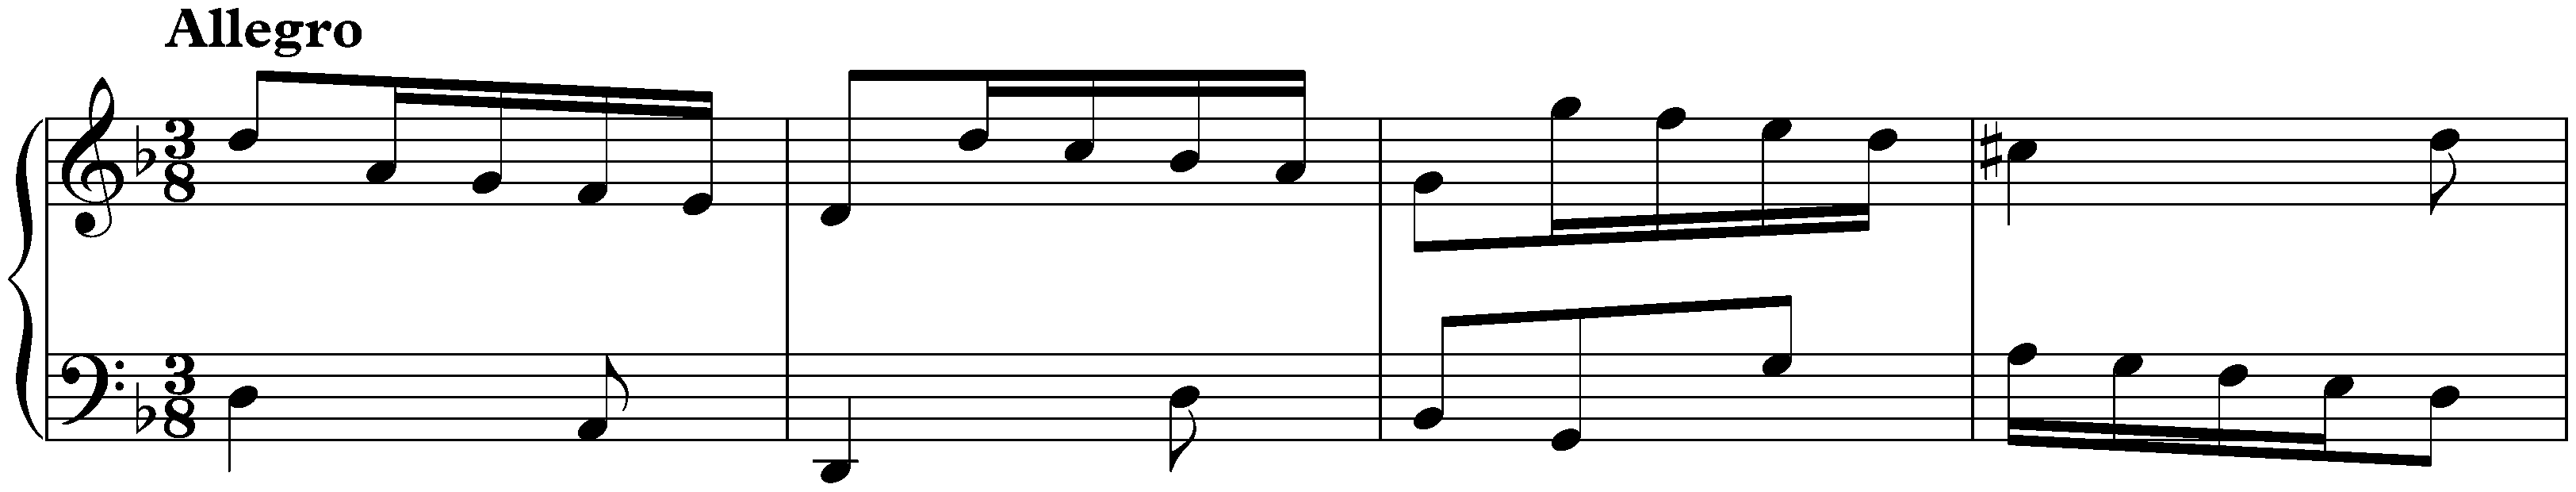 Sonata in D minor, K. 90; 4. Allegro